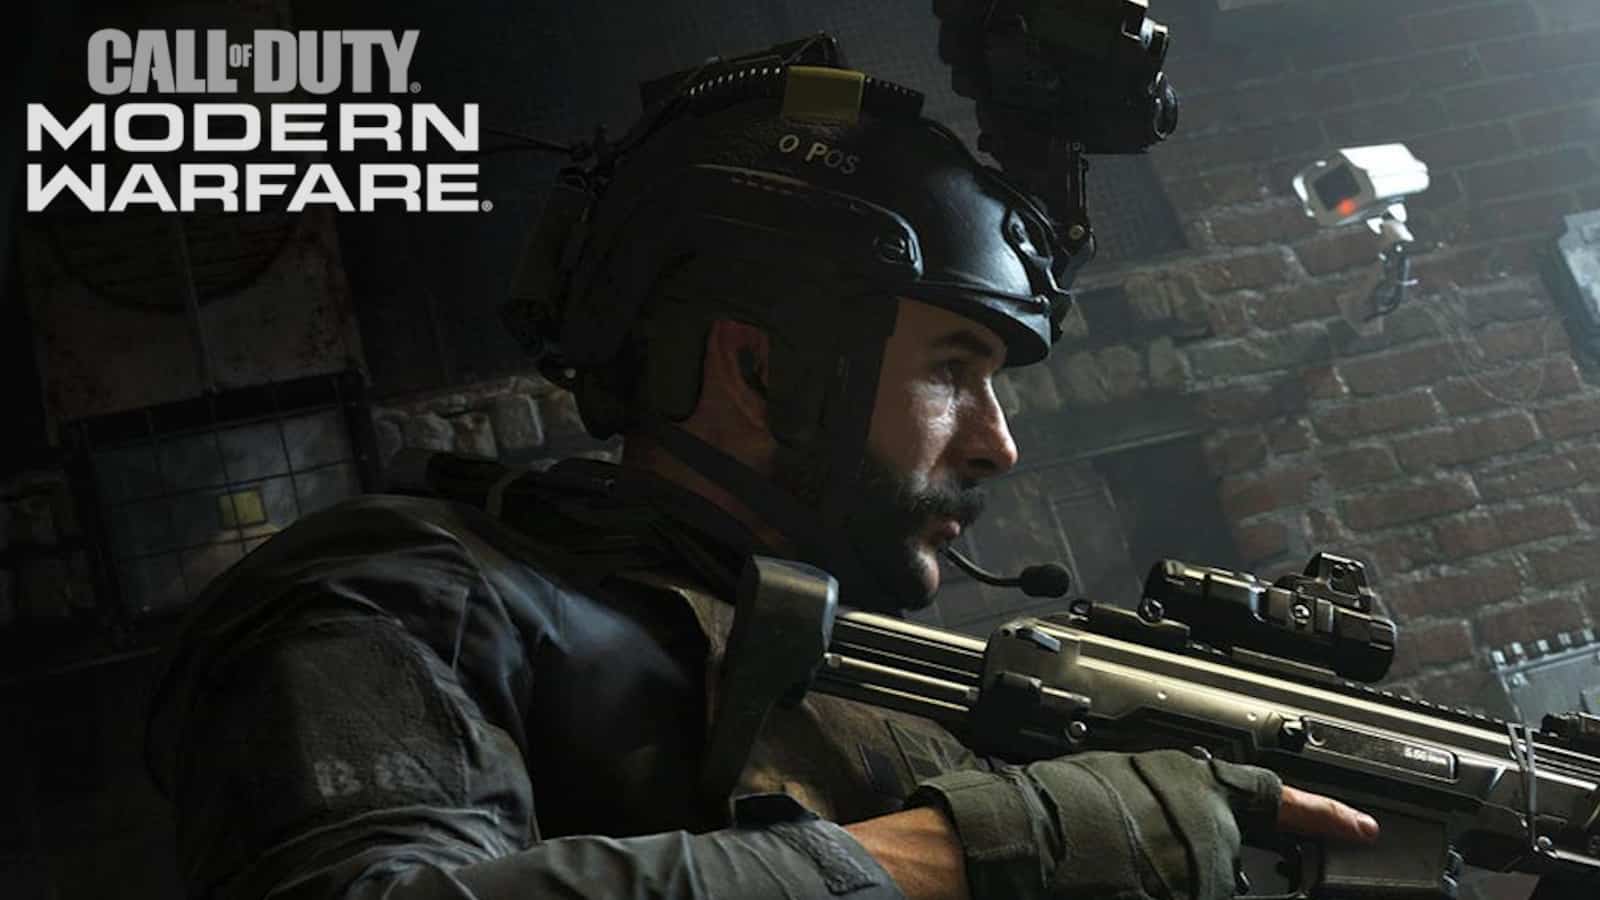 Call of Duty 2022 Leak Reveals Big Improvements From Modern Warfare